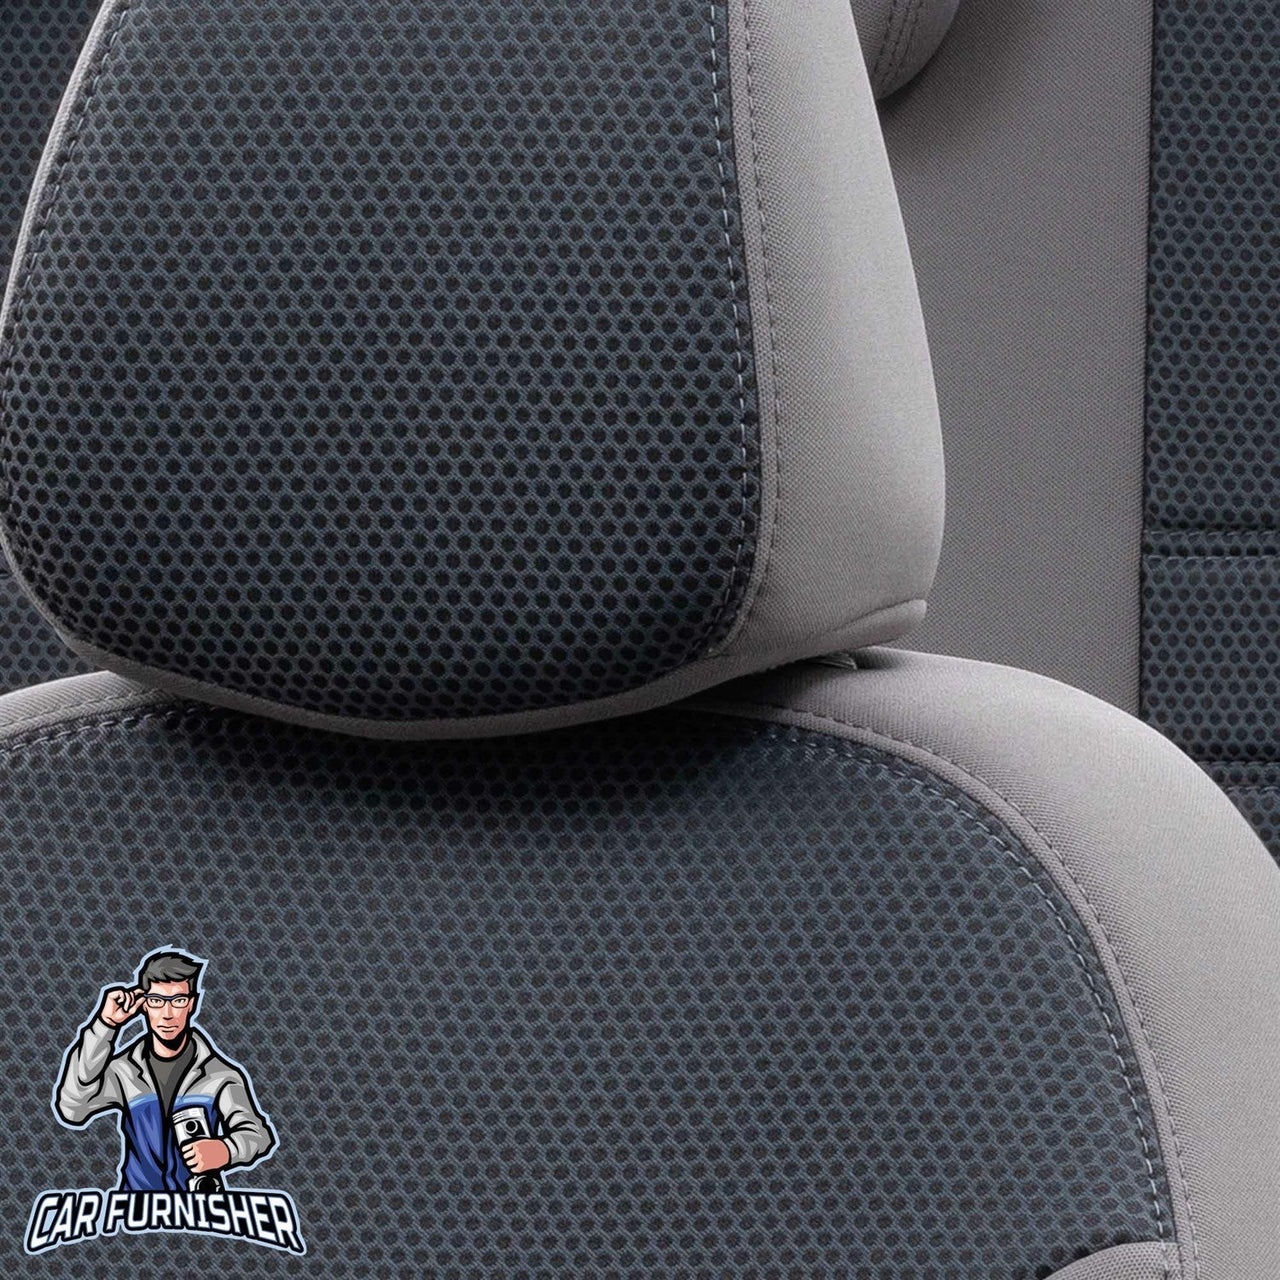 Chevrolet Spark Seat Covers Original Jacquard Design Smoked Jacquard Fabric